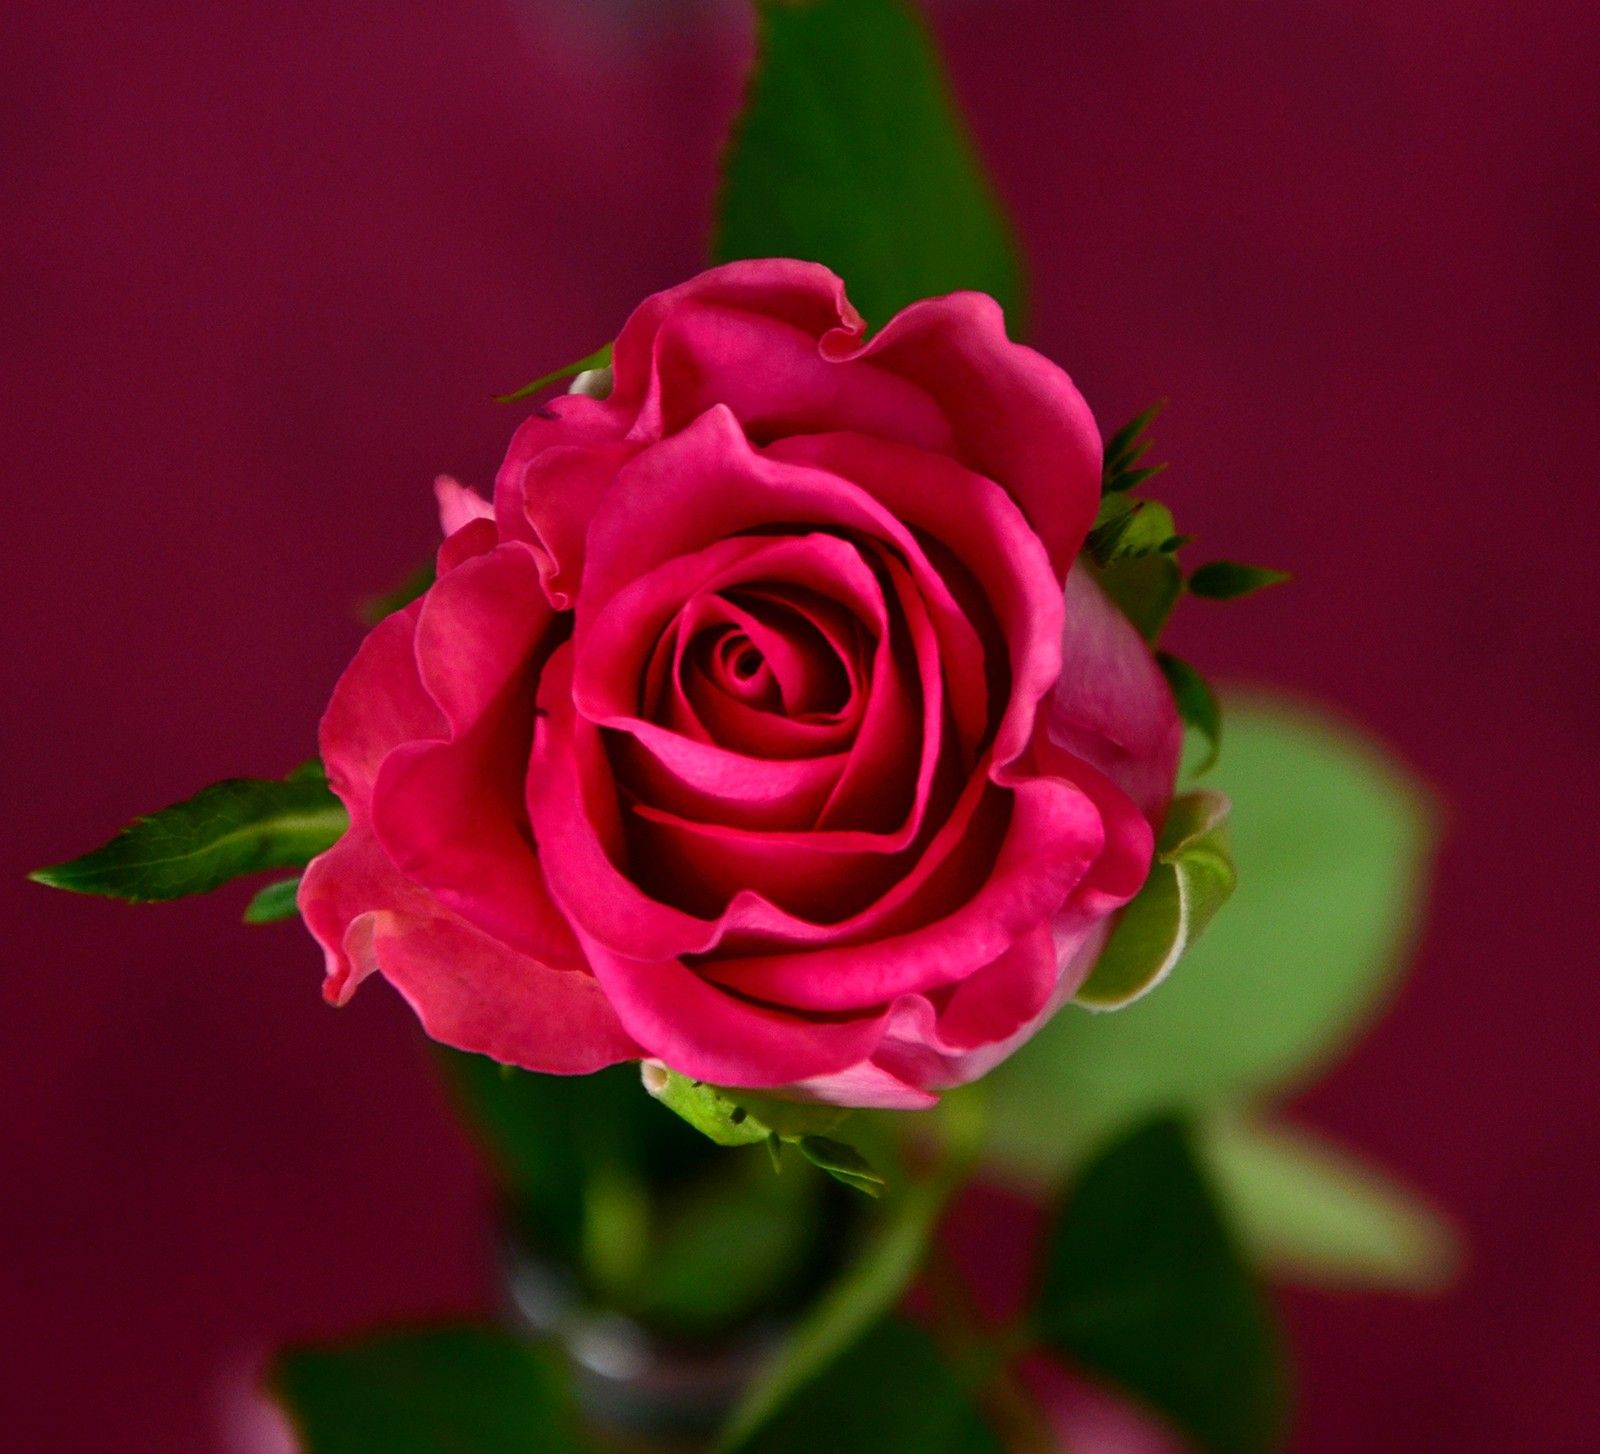 Flower, Roses, Red, Roses, Bloom, Smells Good, HD Nature Image